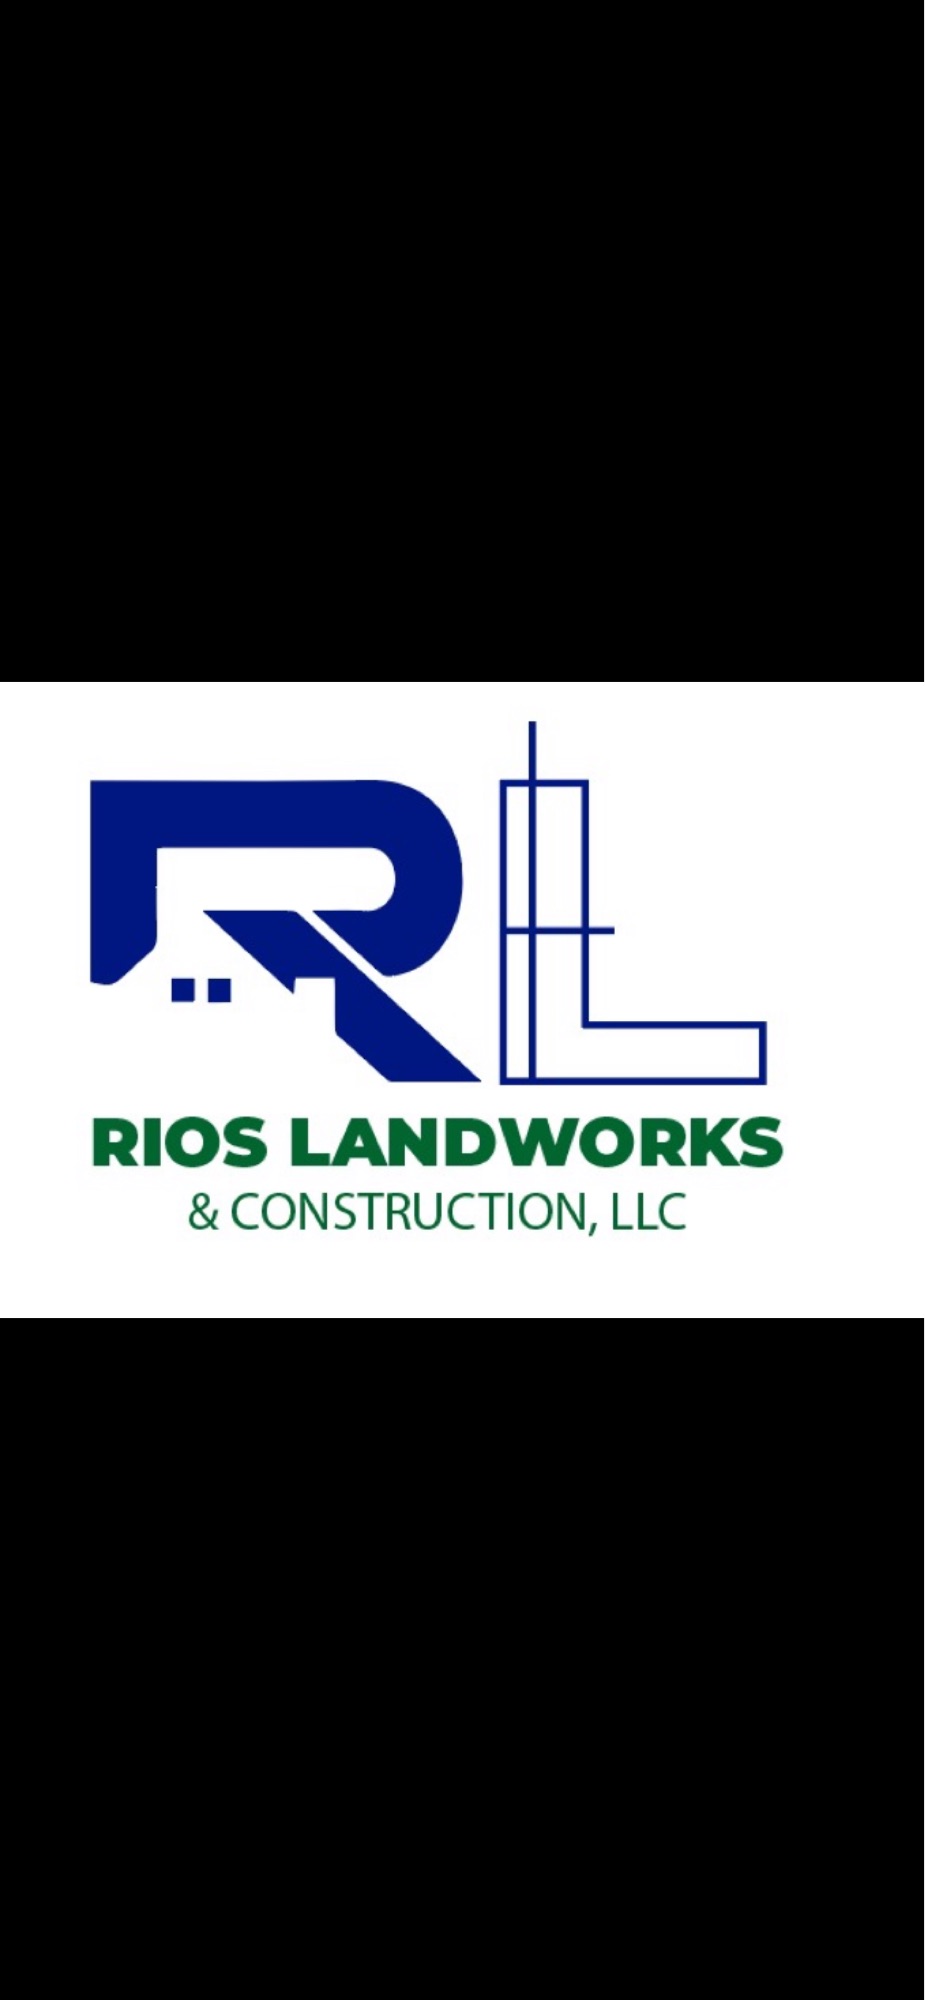 Rios Landworks & Construction, LLC Logo